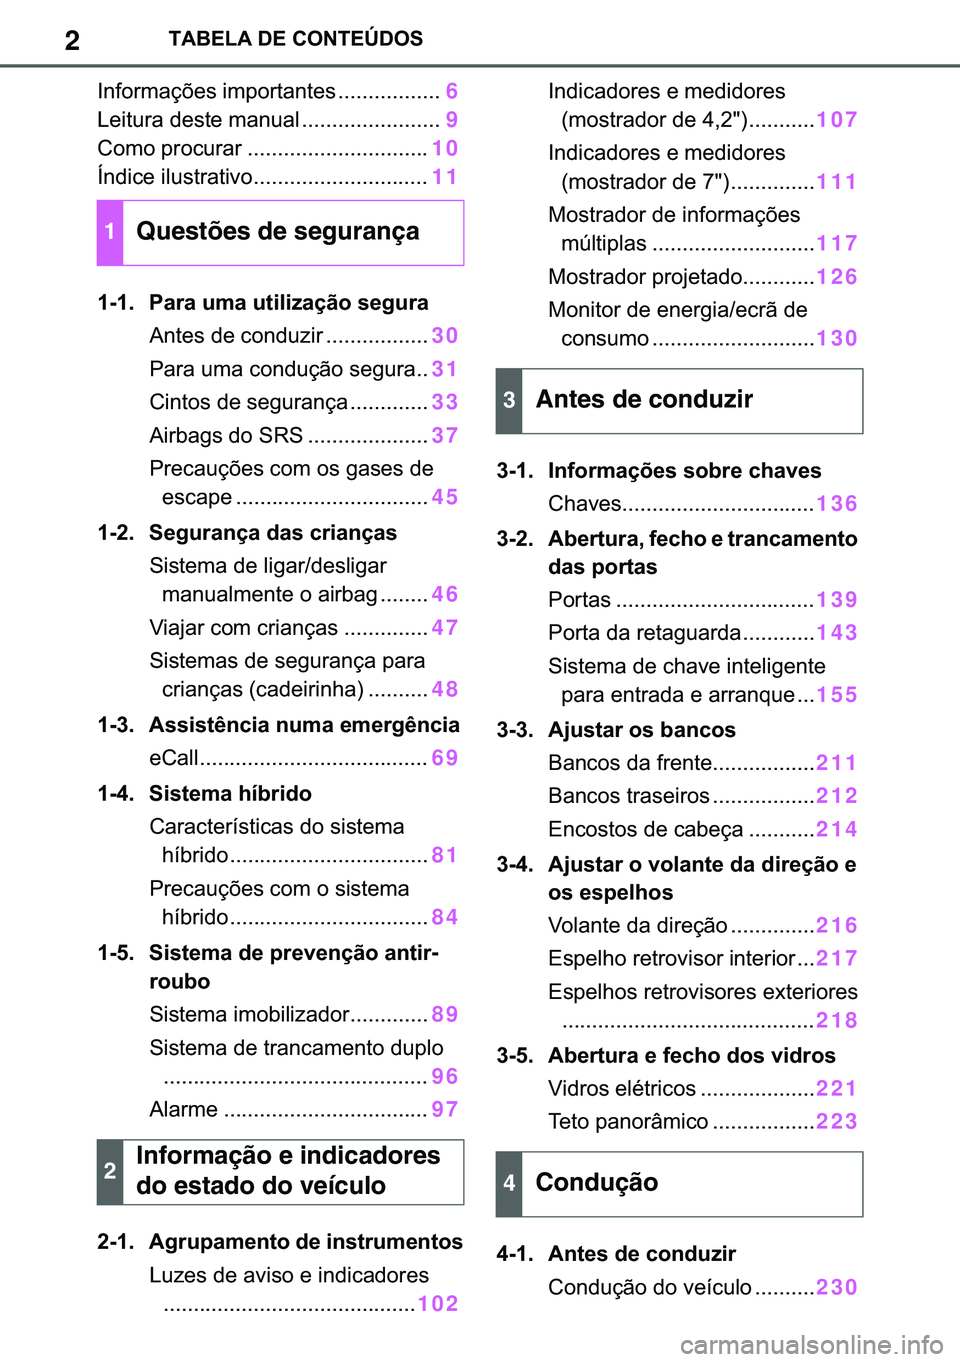 TOYOTA COROLLA HATCHBACK 2020  Manual de utilização (in Portuguese) 2�7�$�%�(�/�$���(��&�2�1�7�(�Ò��2�6
�,�Q�I�R�U�P�D�o�}�H�V��L�P�S�R�U�W�D�Q�W�H�V �����������������6
�/�H�L�W�X�U�D��G�H�V�W�H��P�D�Q�X�D�O ������������������